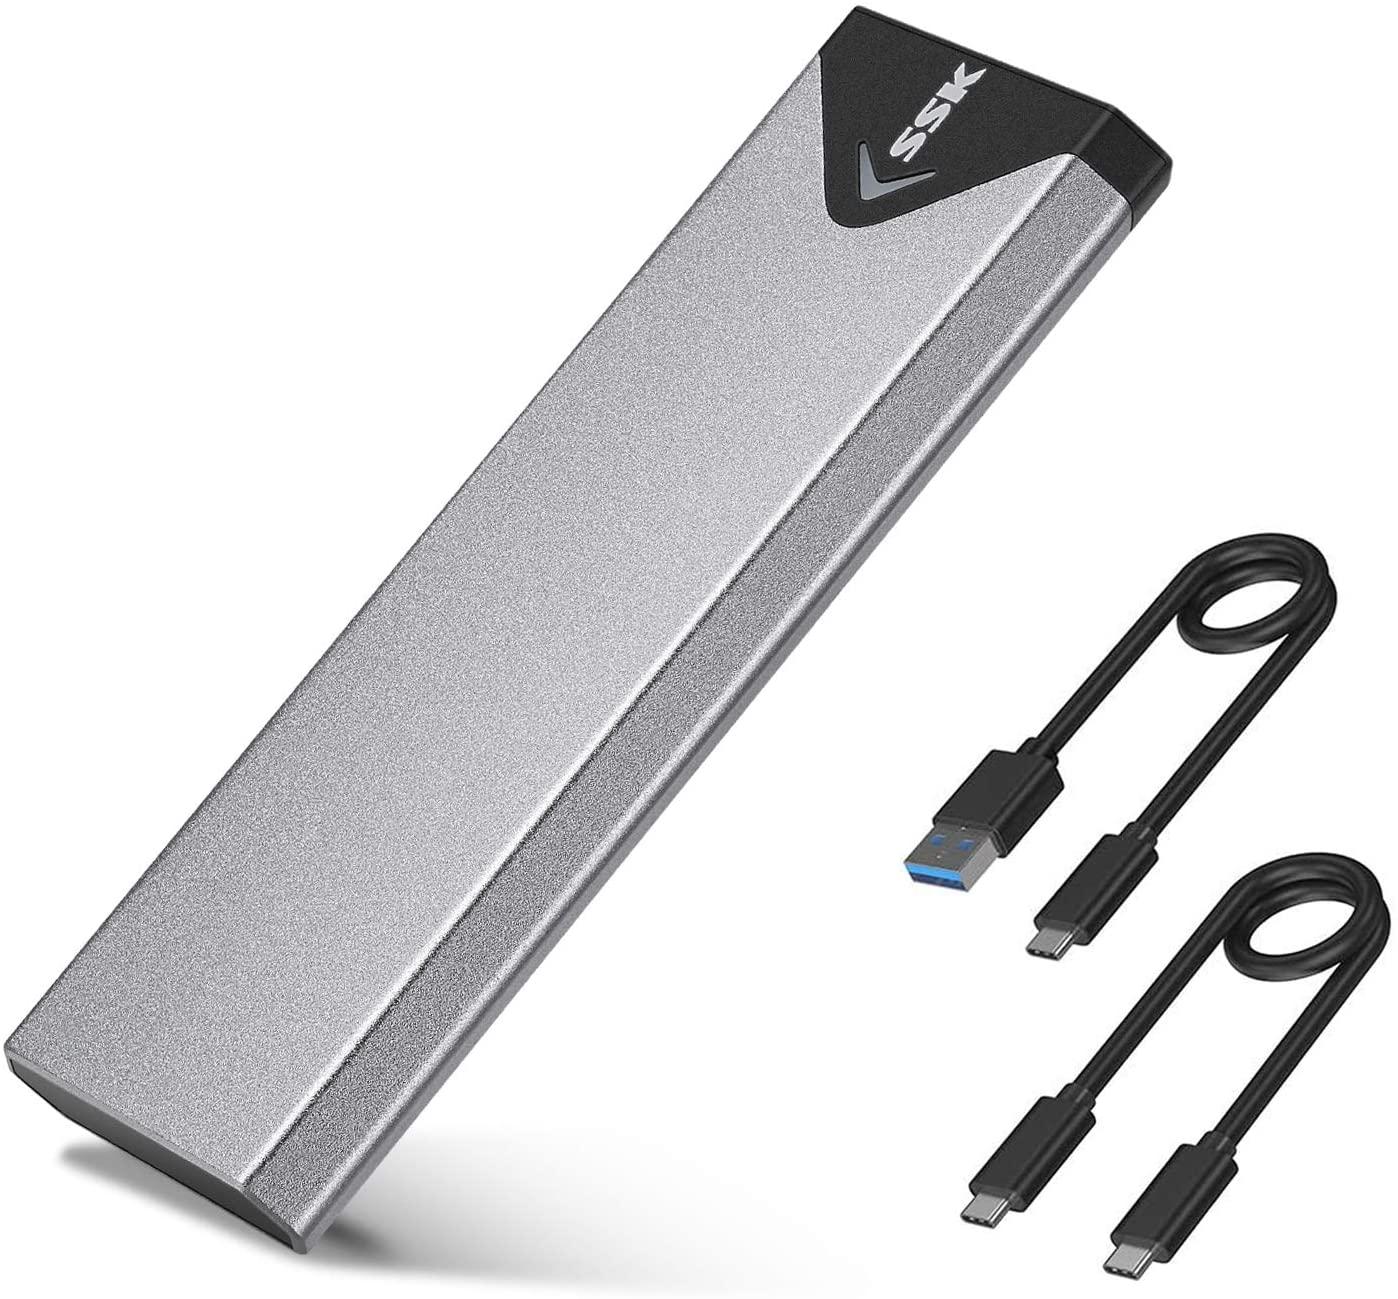 SSK Aluminum M.2 NVME SSD Enclosure Adapter for $16.99